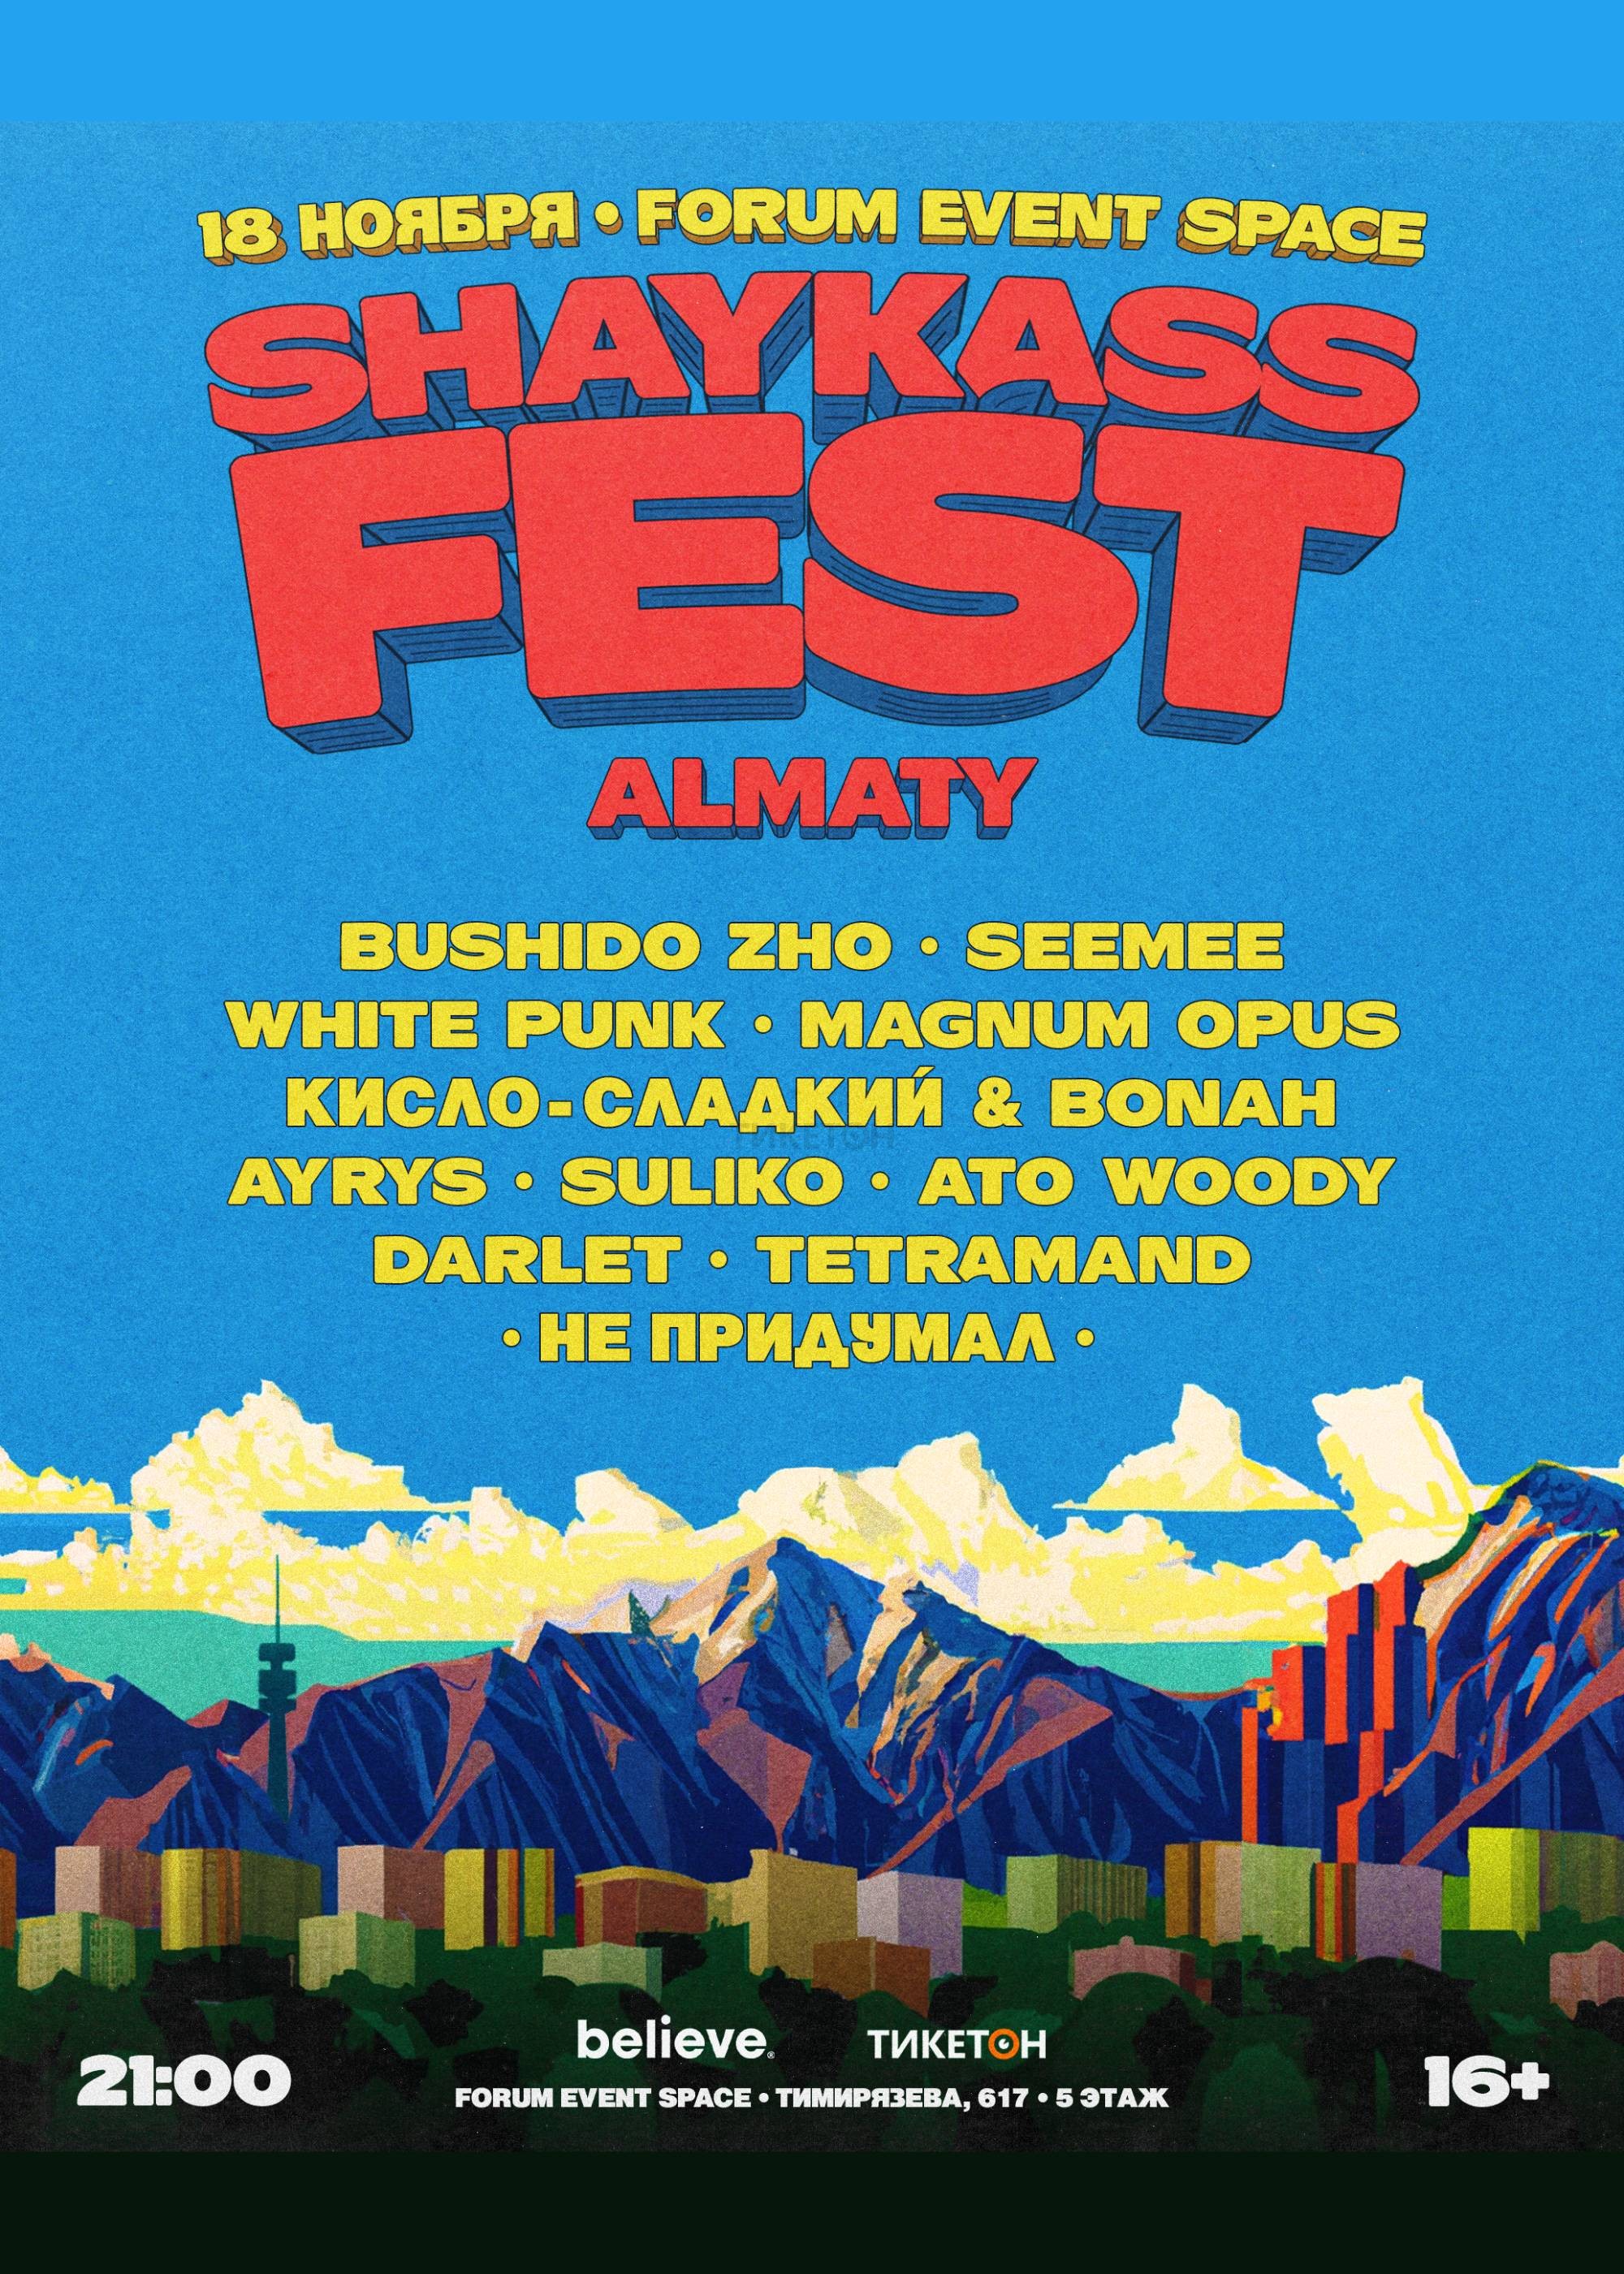 SHAYKASS FEST